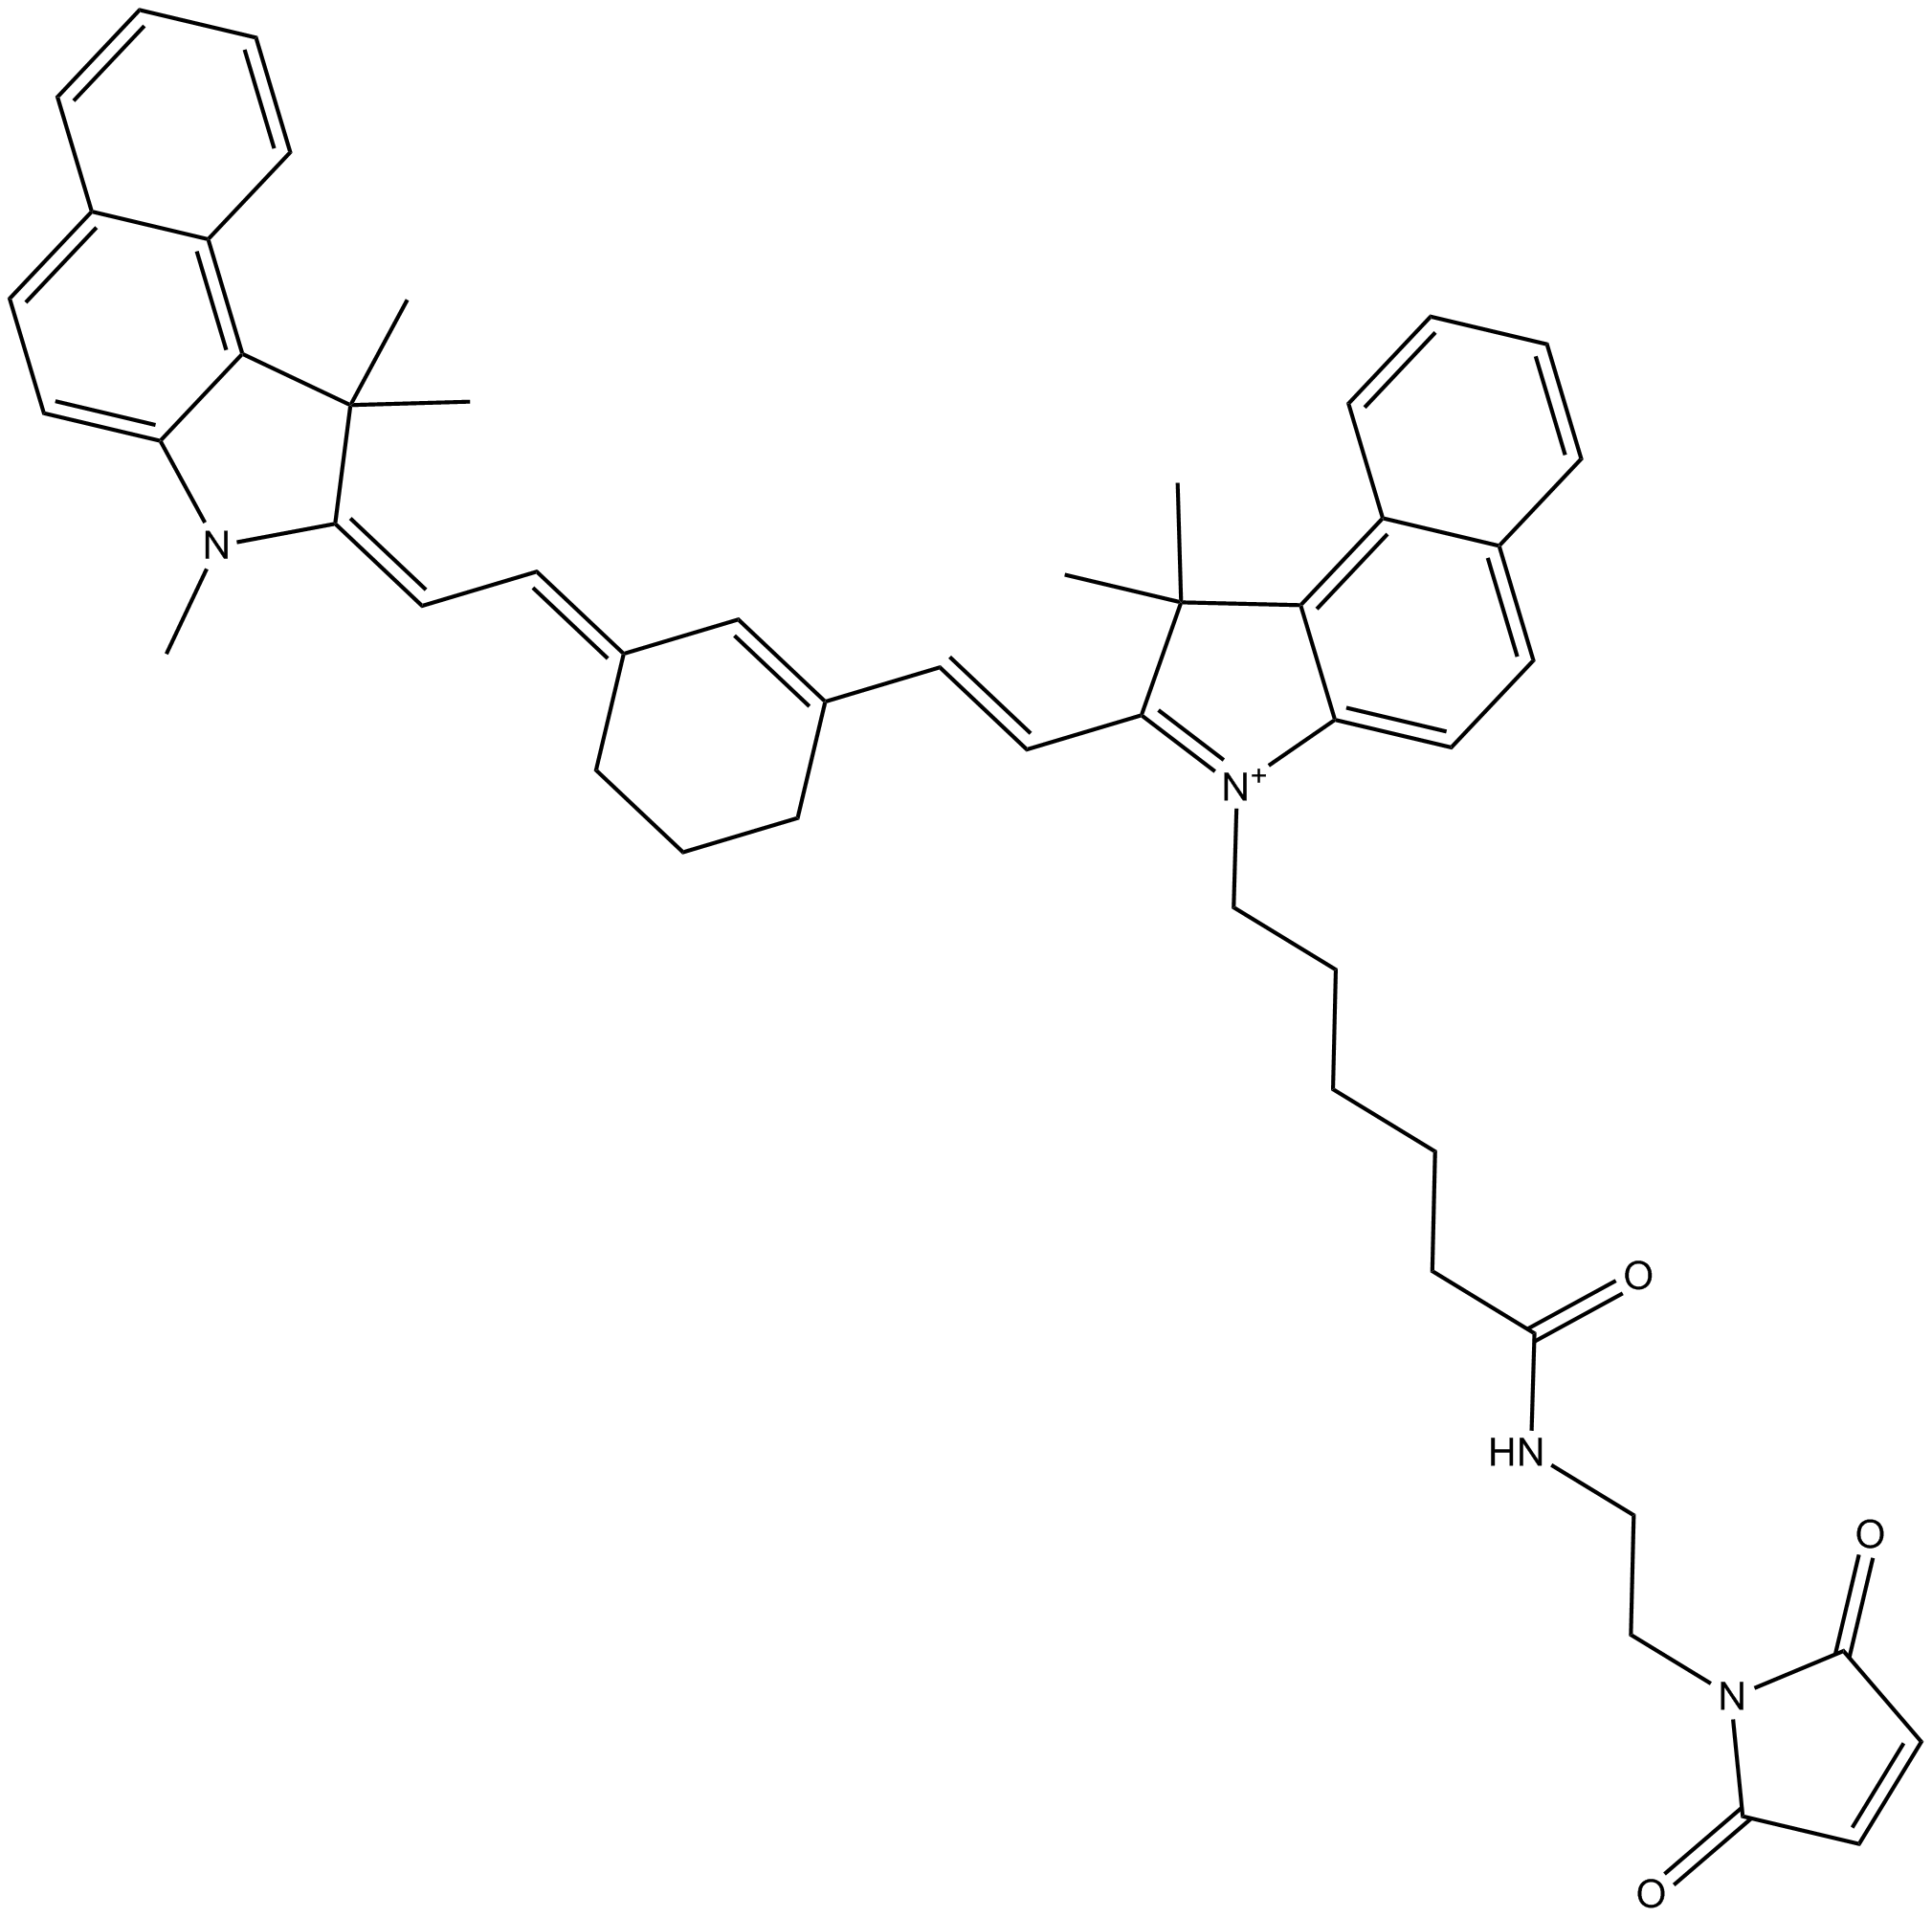 Cy7.5 maleimide(non-sulfonated)